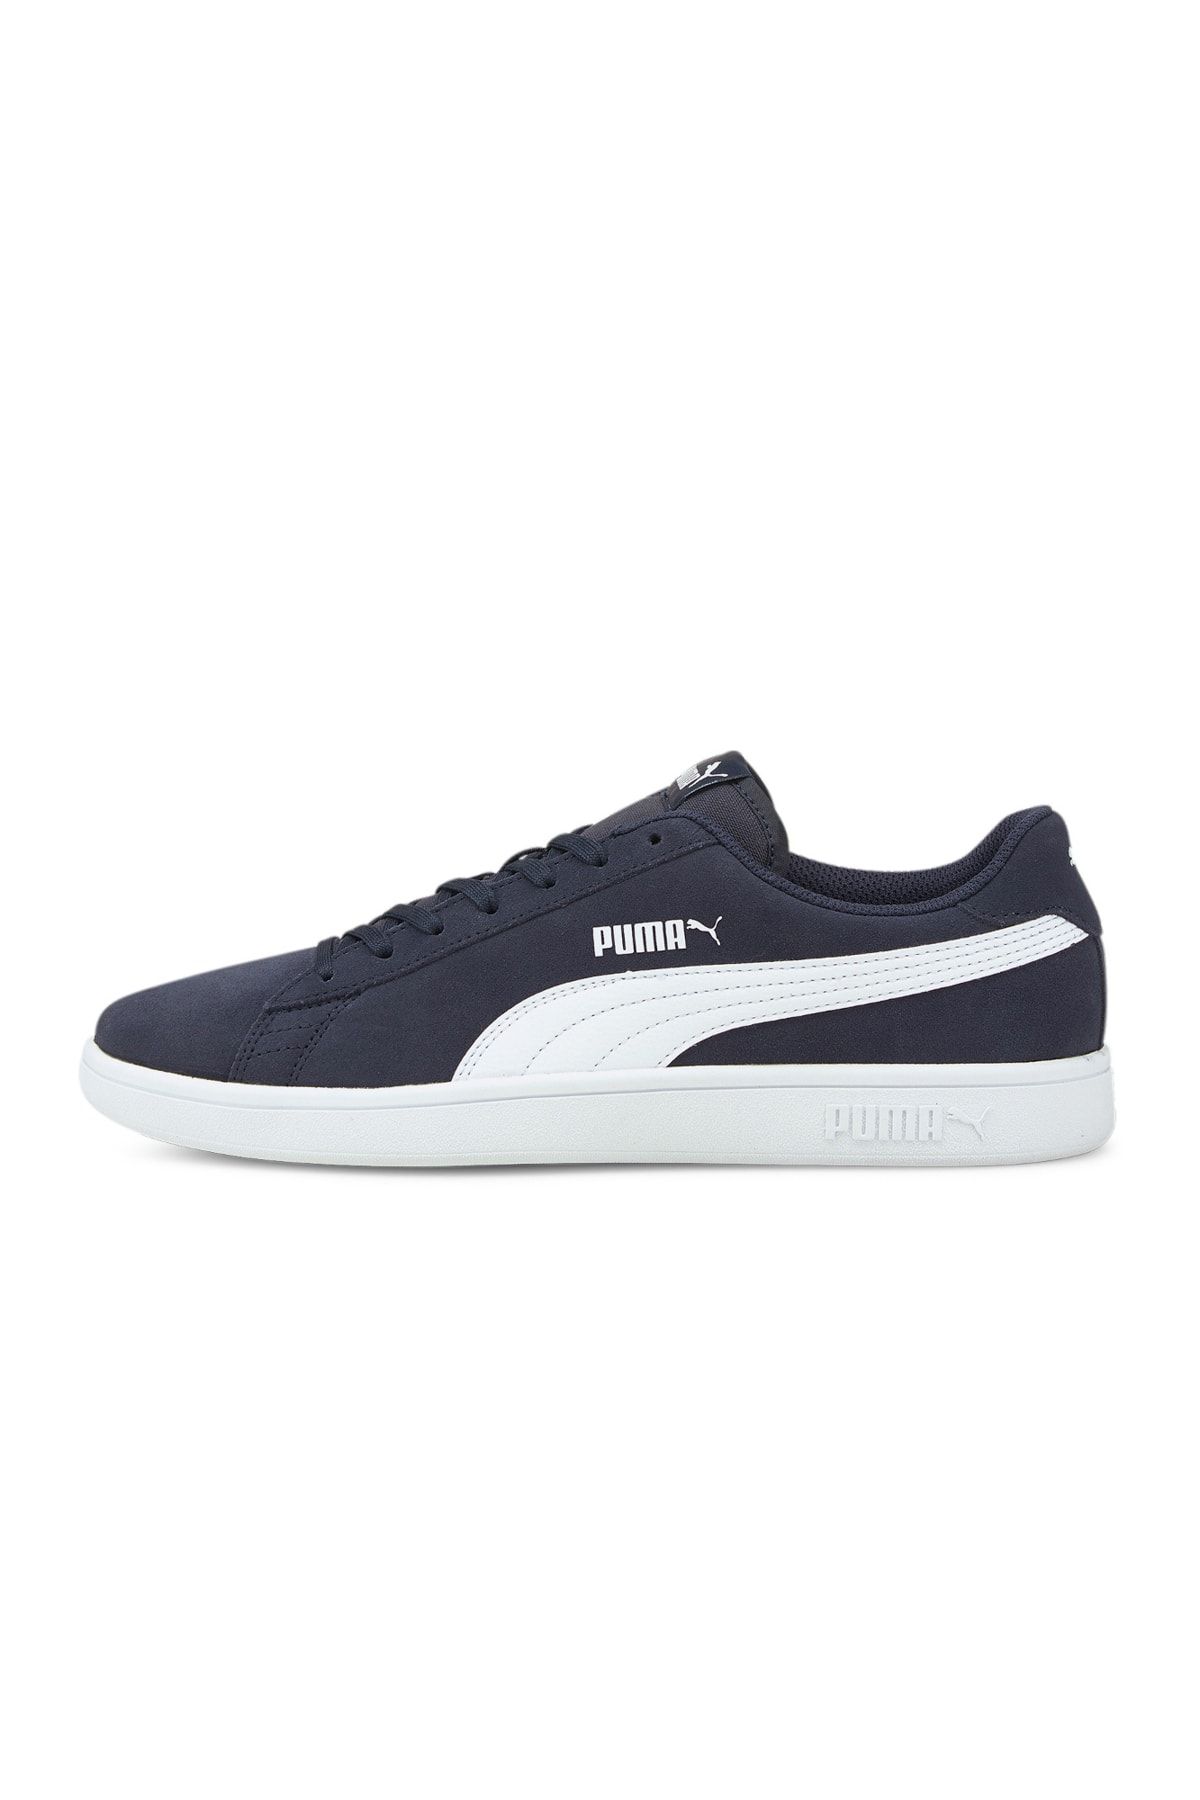 Puma SMASH V2 Lacivert Unisex Sneaker Ayakkabı 100325479